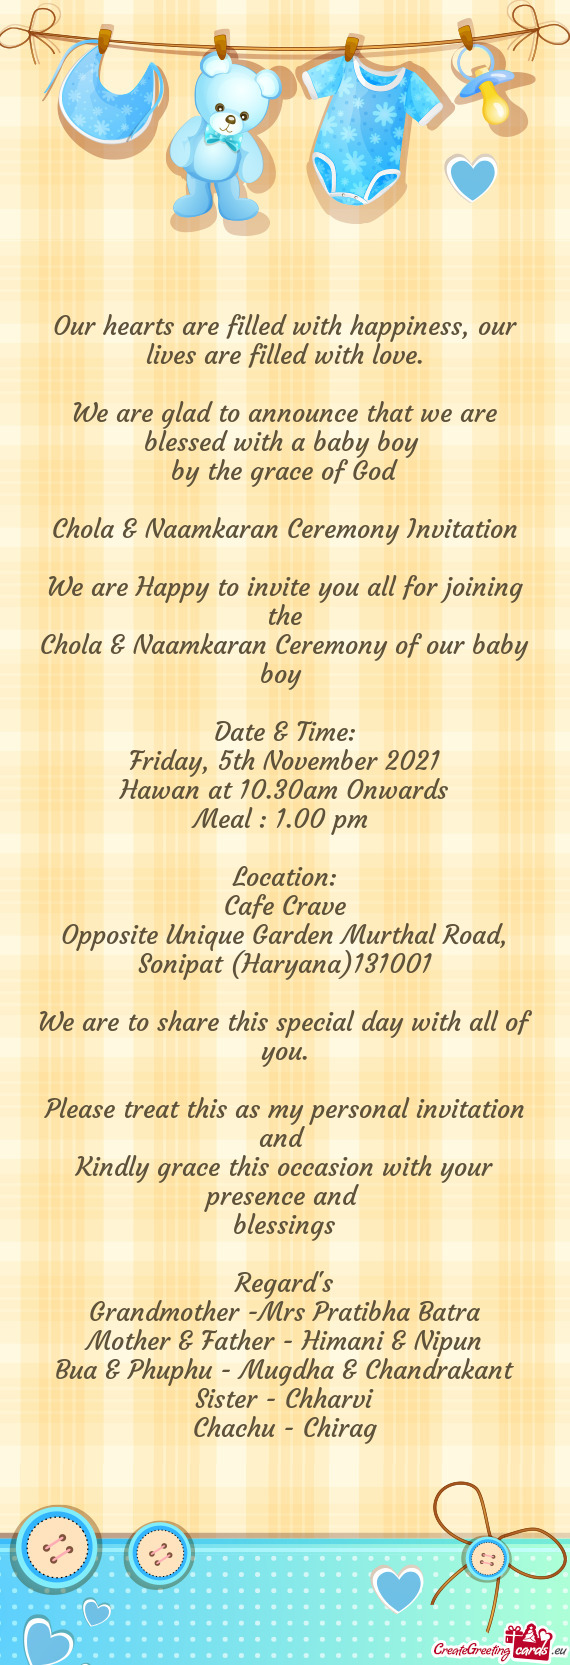 Chola & Naamkaran Ceremony of our baby boy